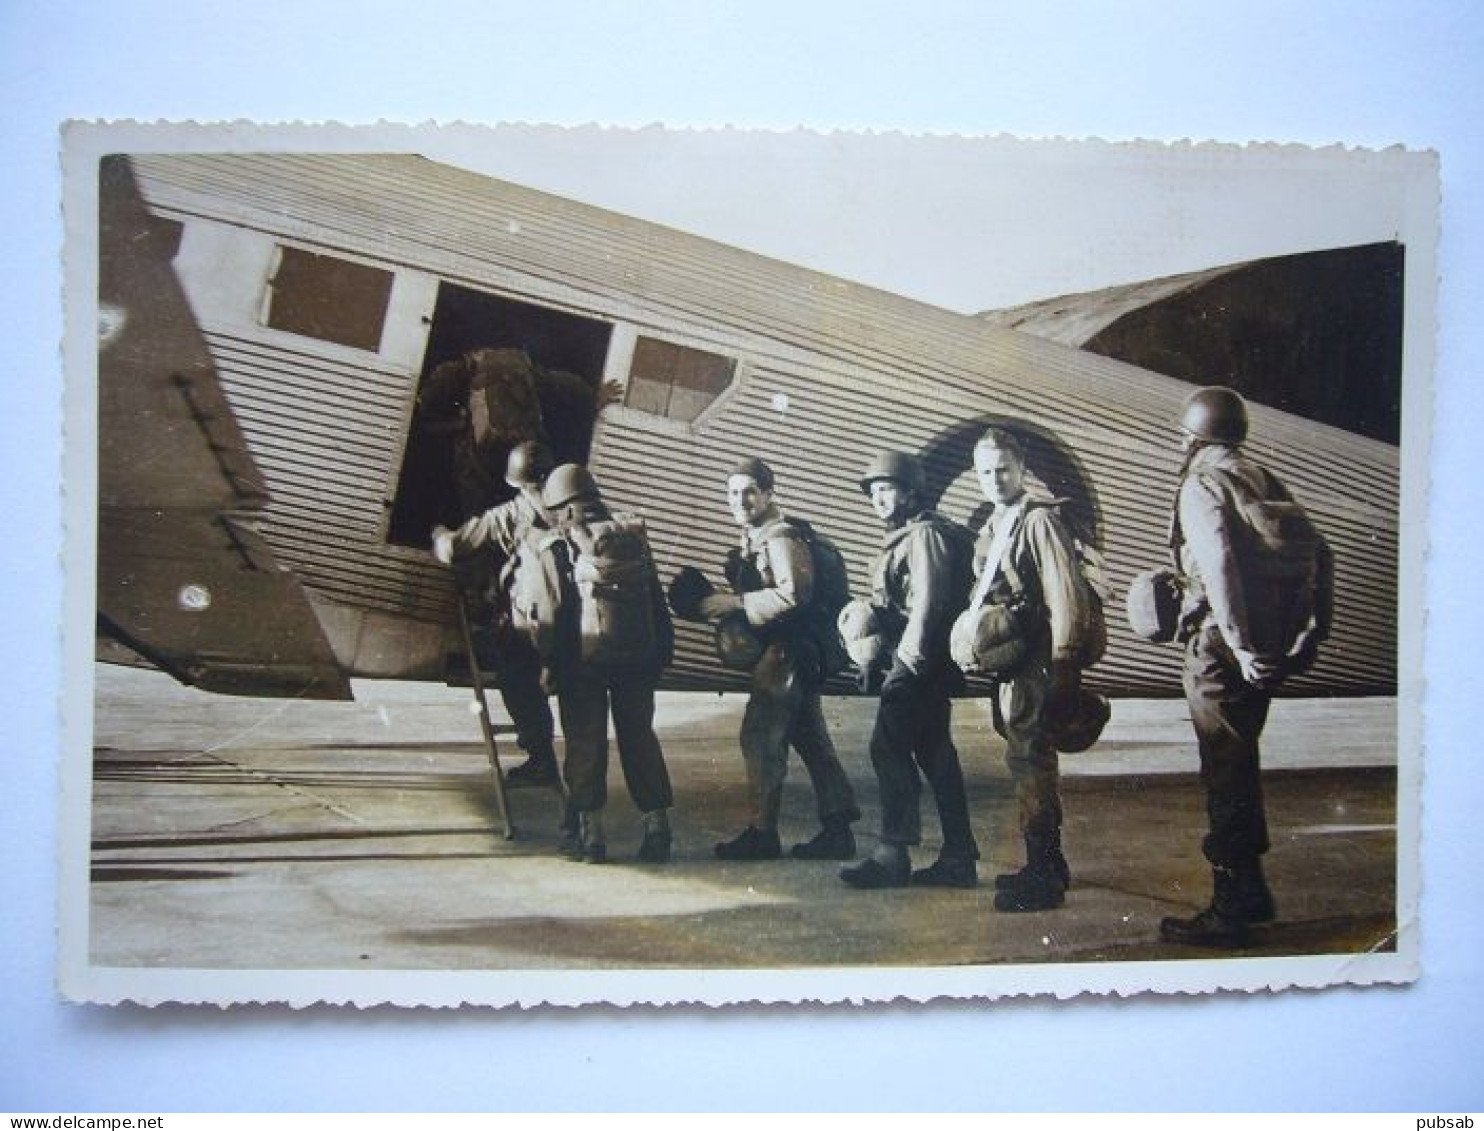 Avion / Airplane / ARMÉE DE L'AIR FRANÇAISE / Junkers Ju 52 / Parachutistes - 1946-....: Era Moderna